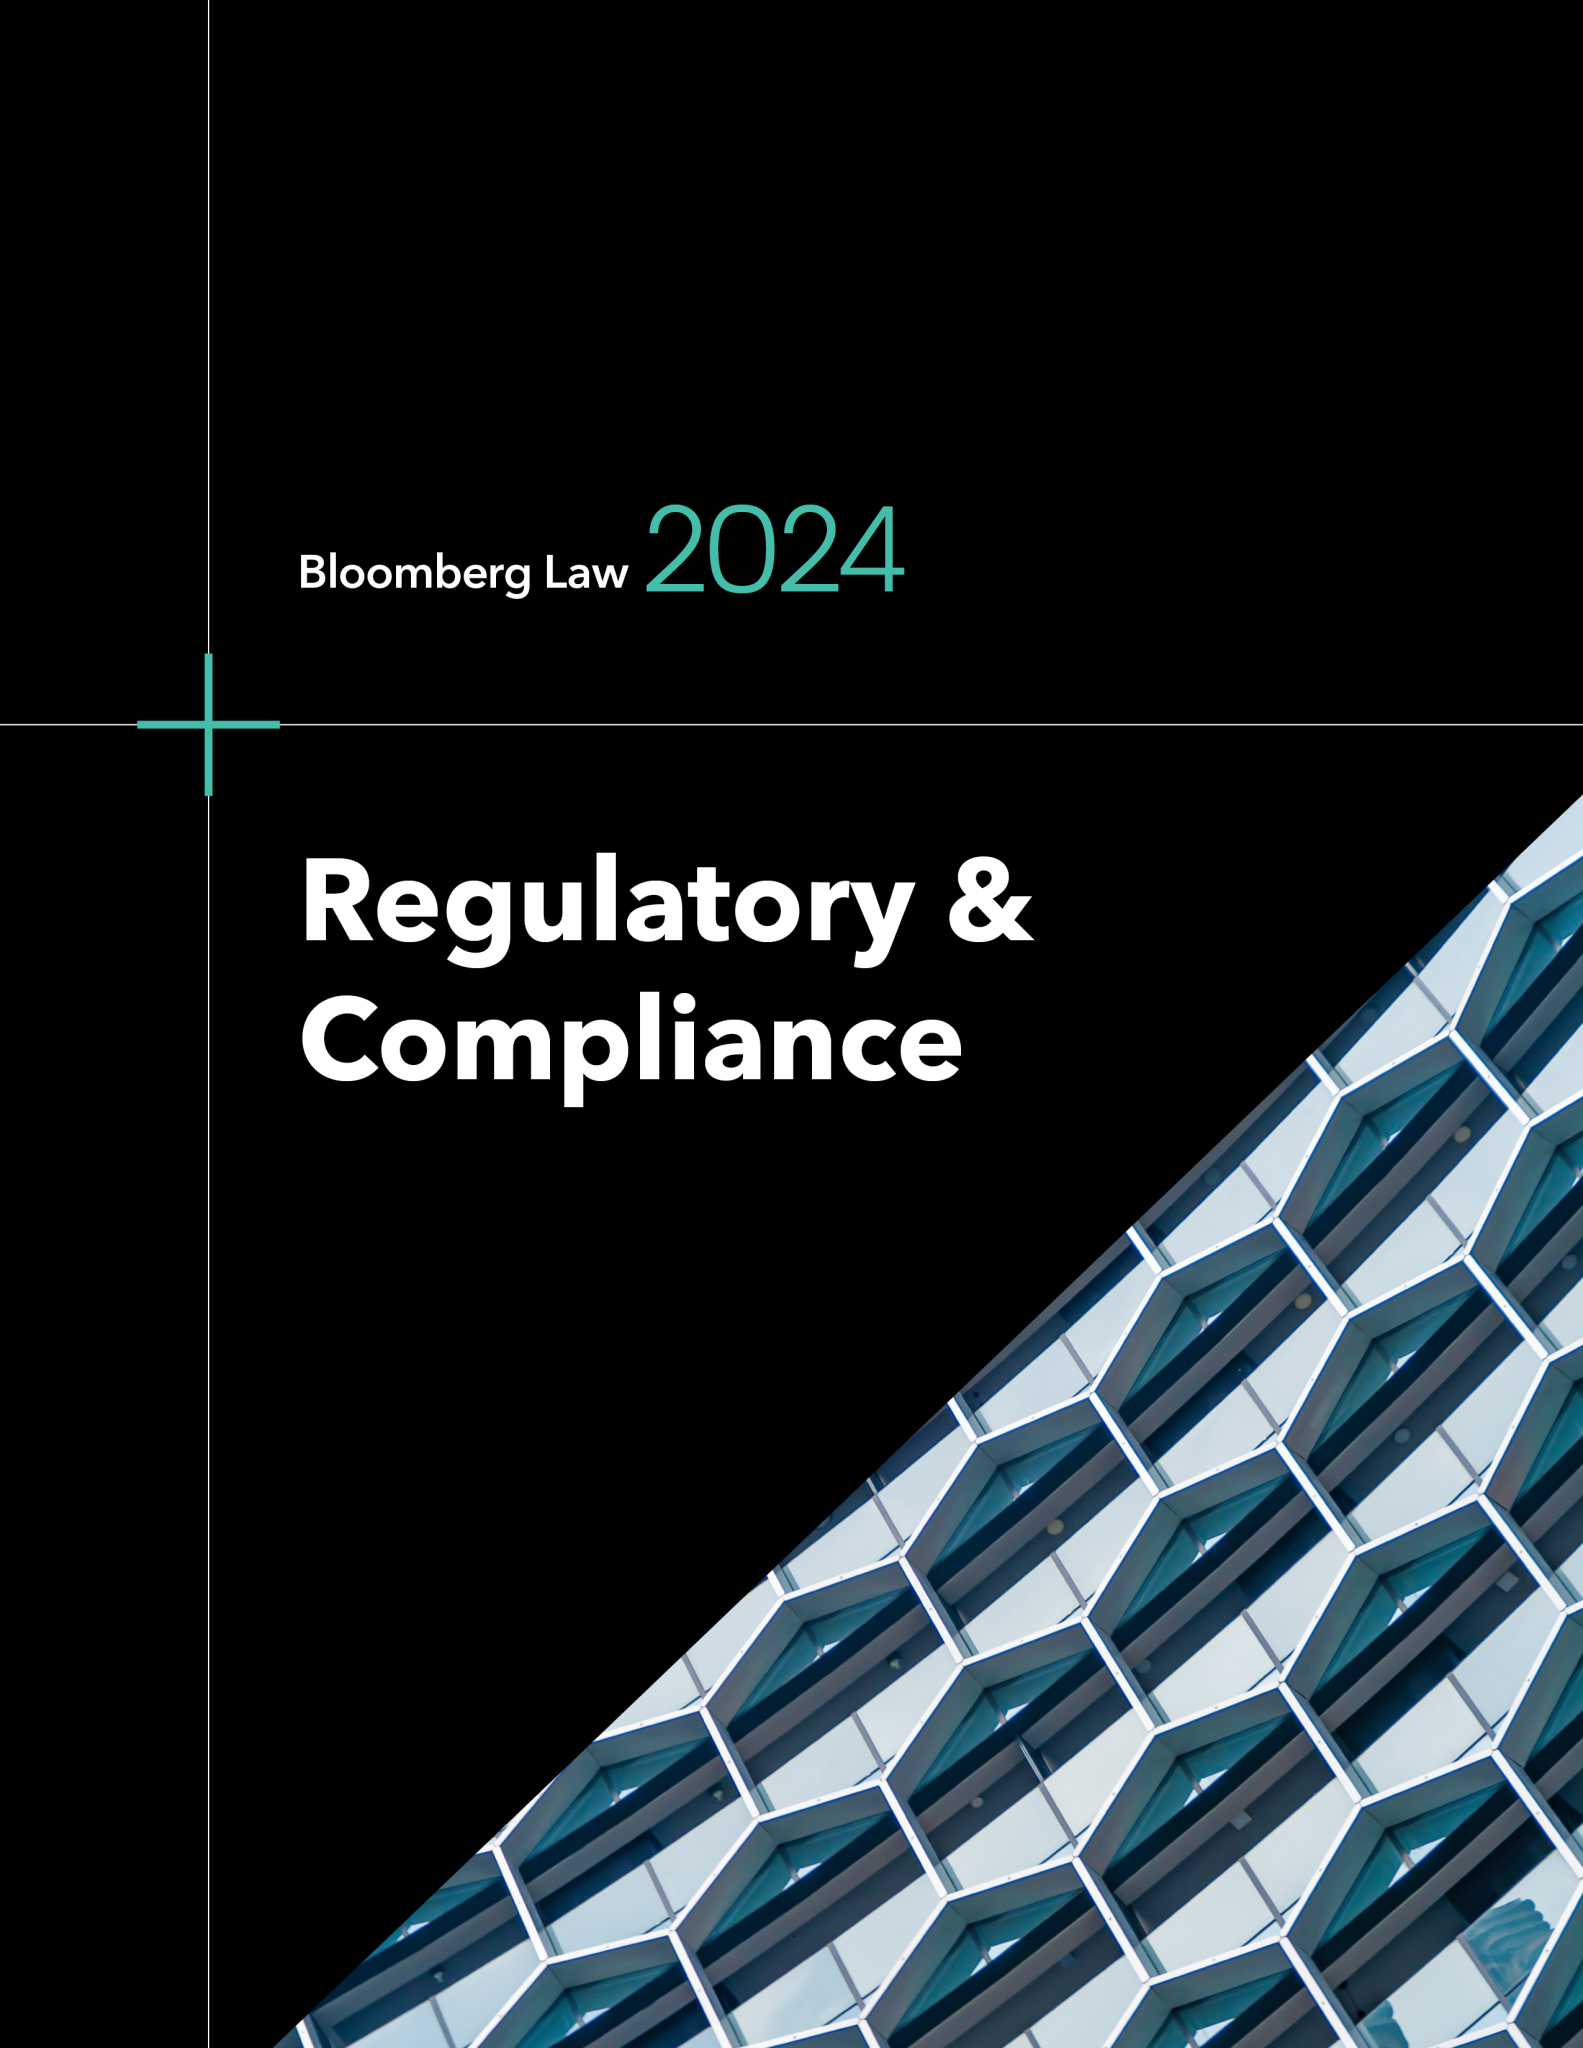 Top Regulatory & Compliance Trends in 2024 Bloomberg Law